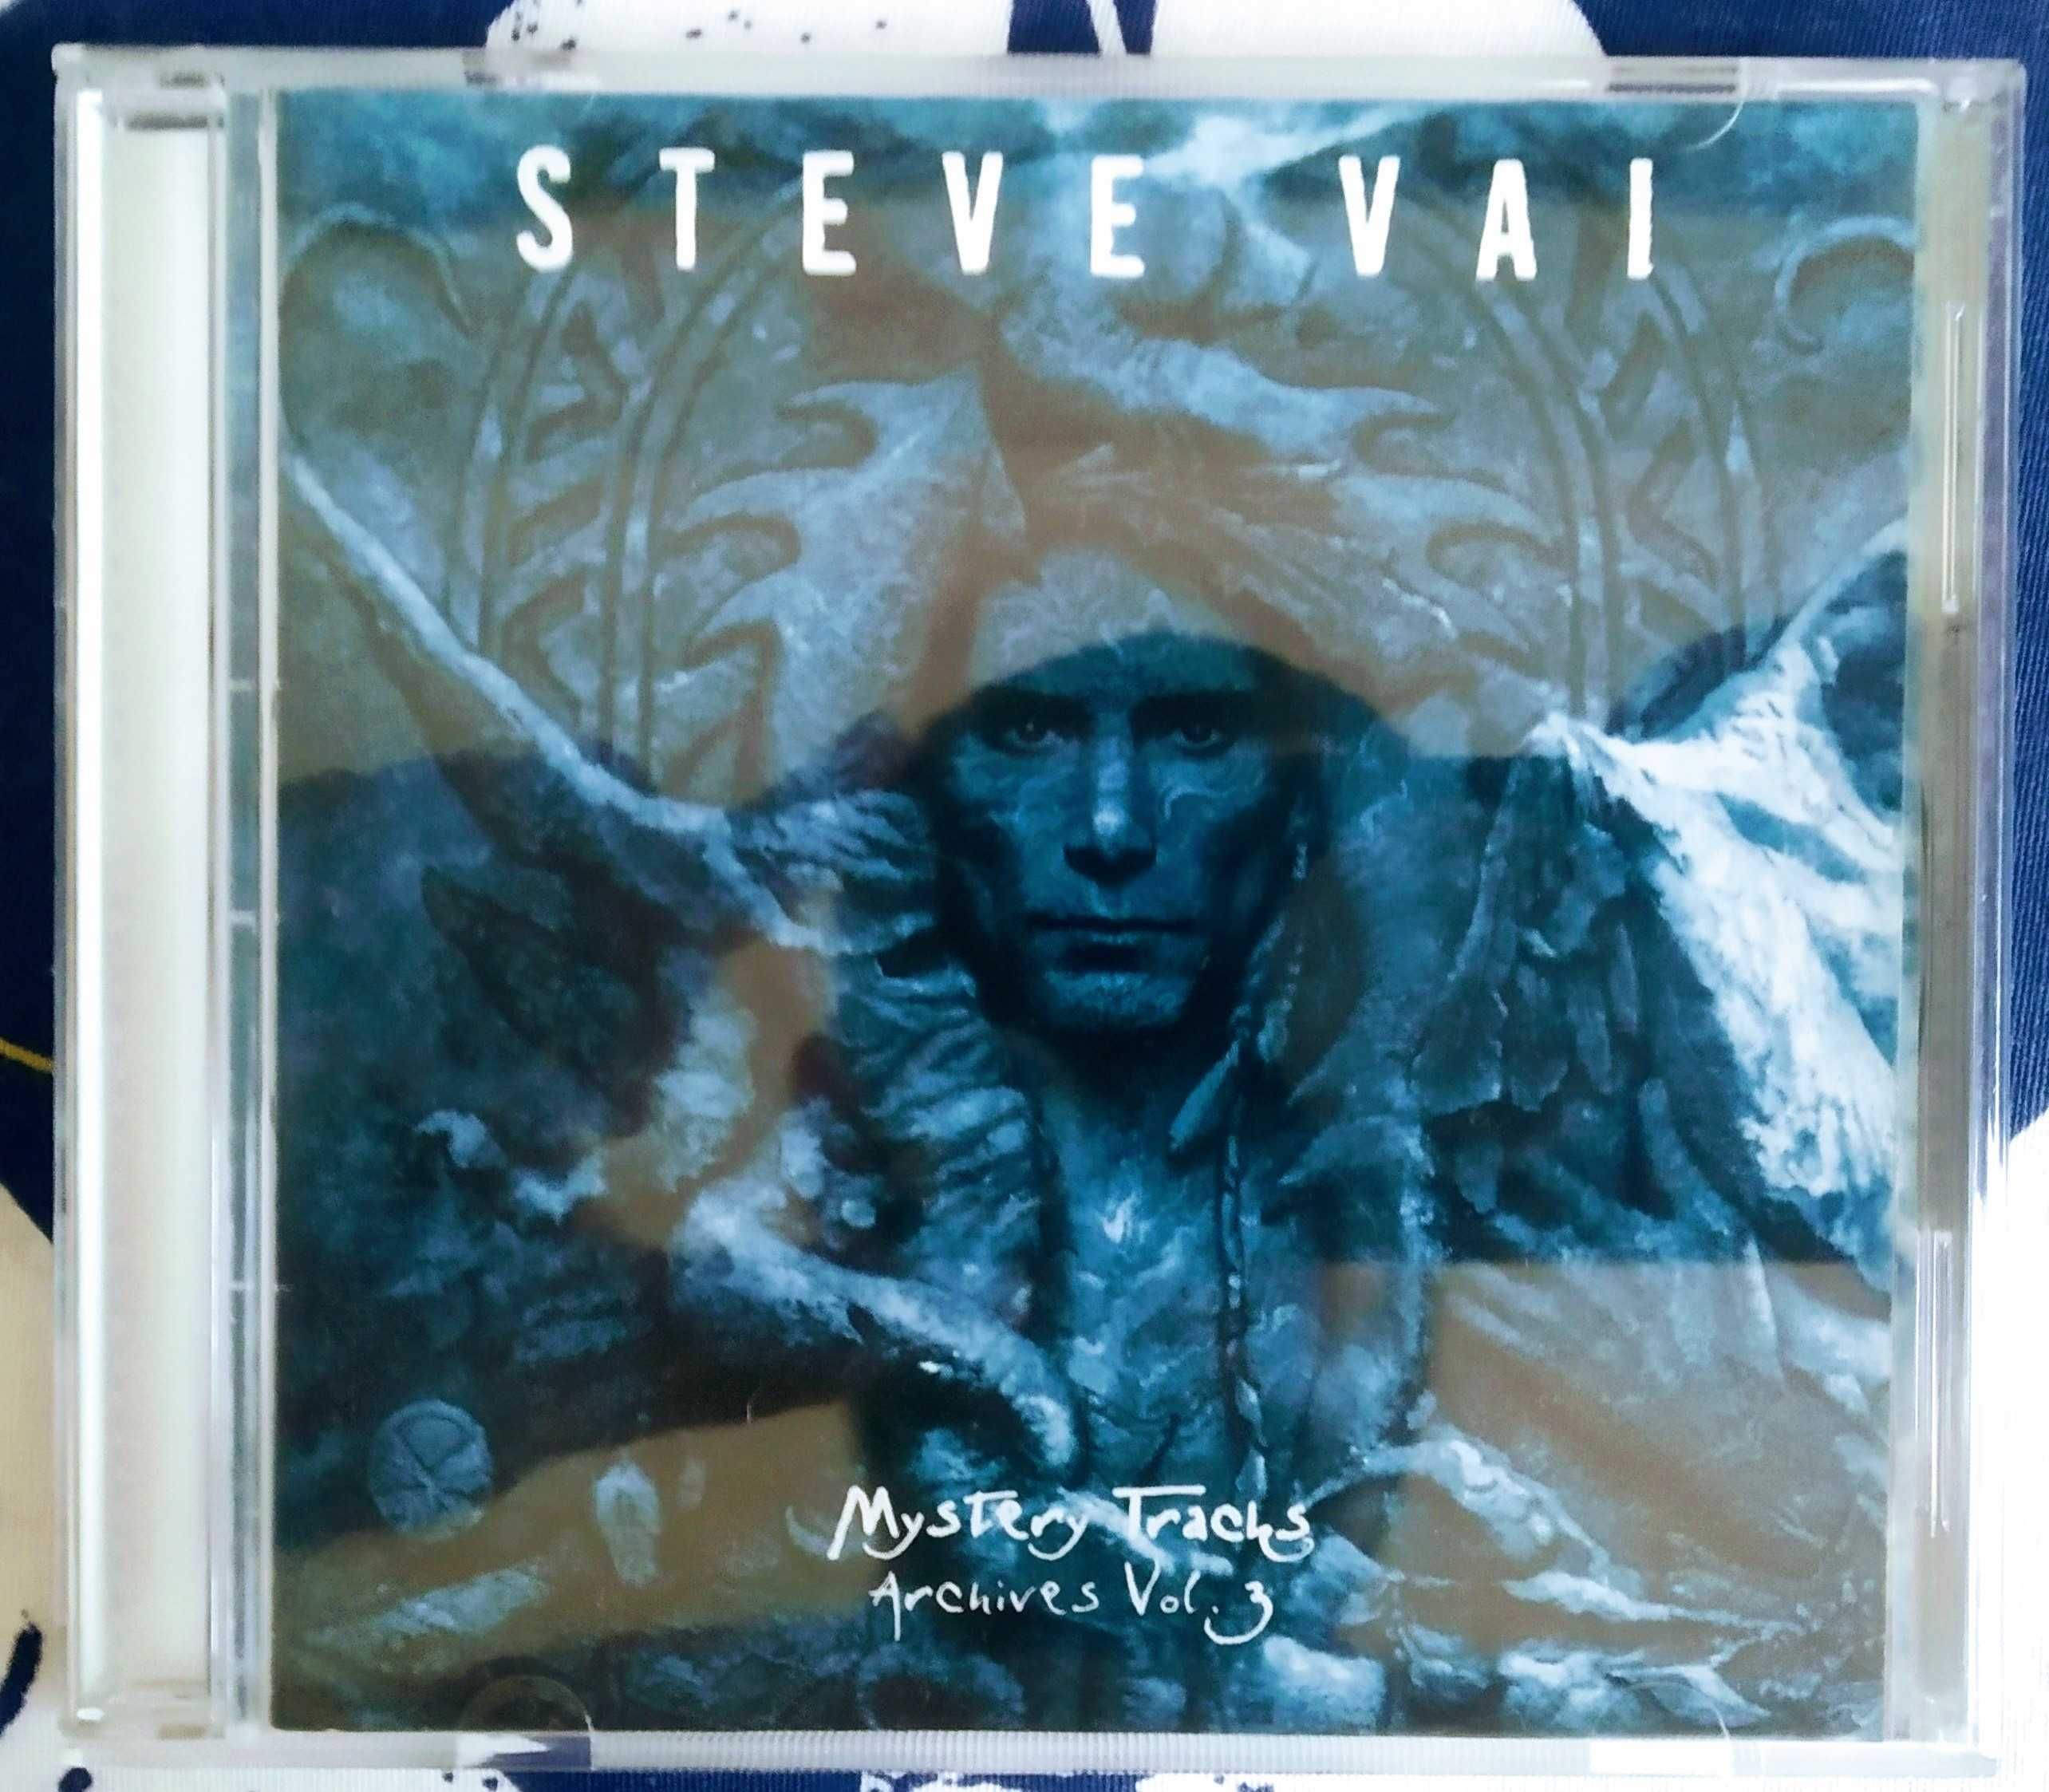 CD Steve Vai " Mystery Tracks - Archivess Vol. 3 "